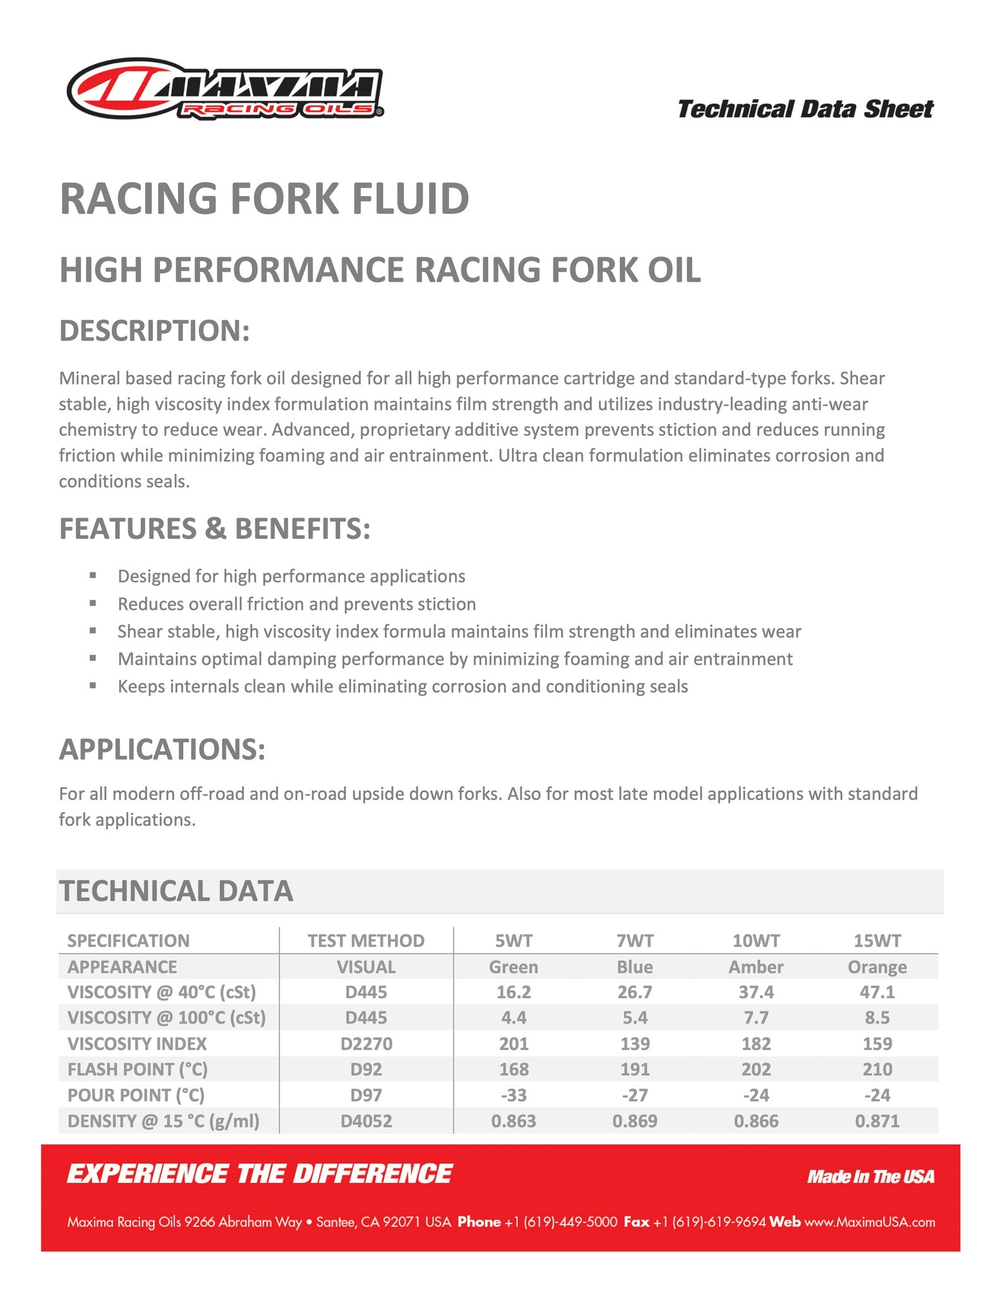 Maxima RACING FORK FLUID (7wt вилочное масло)